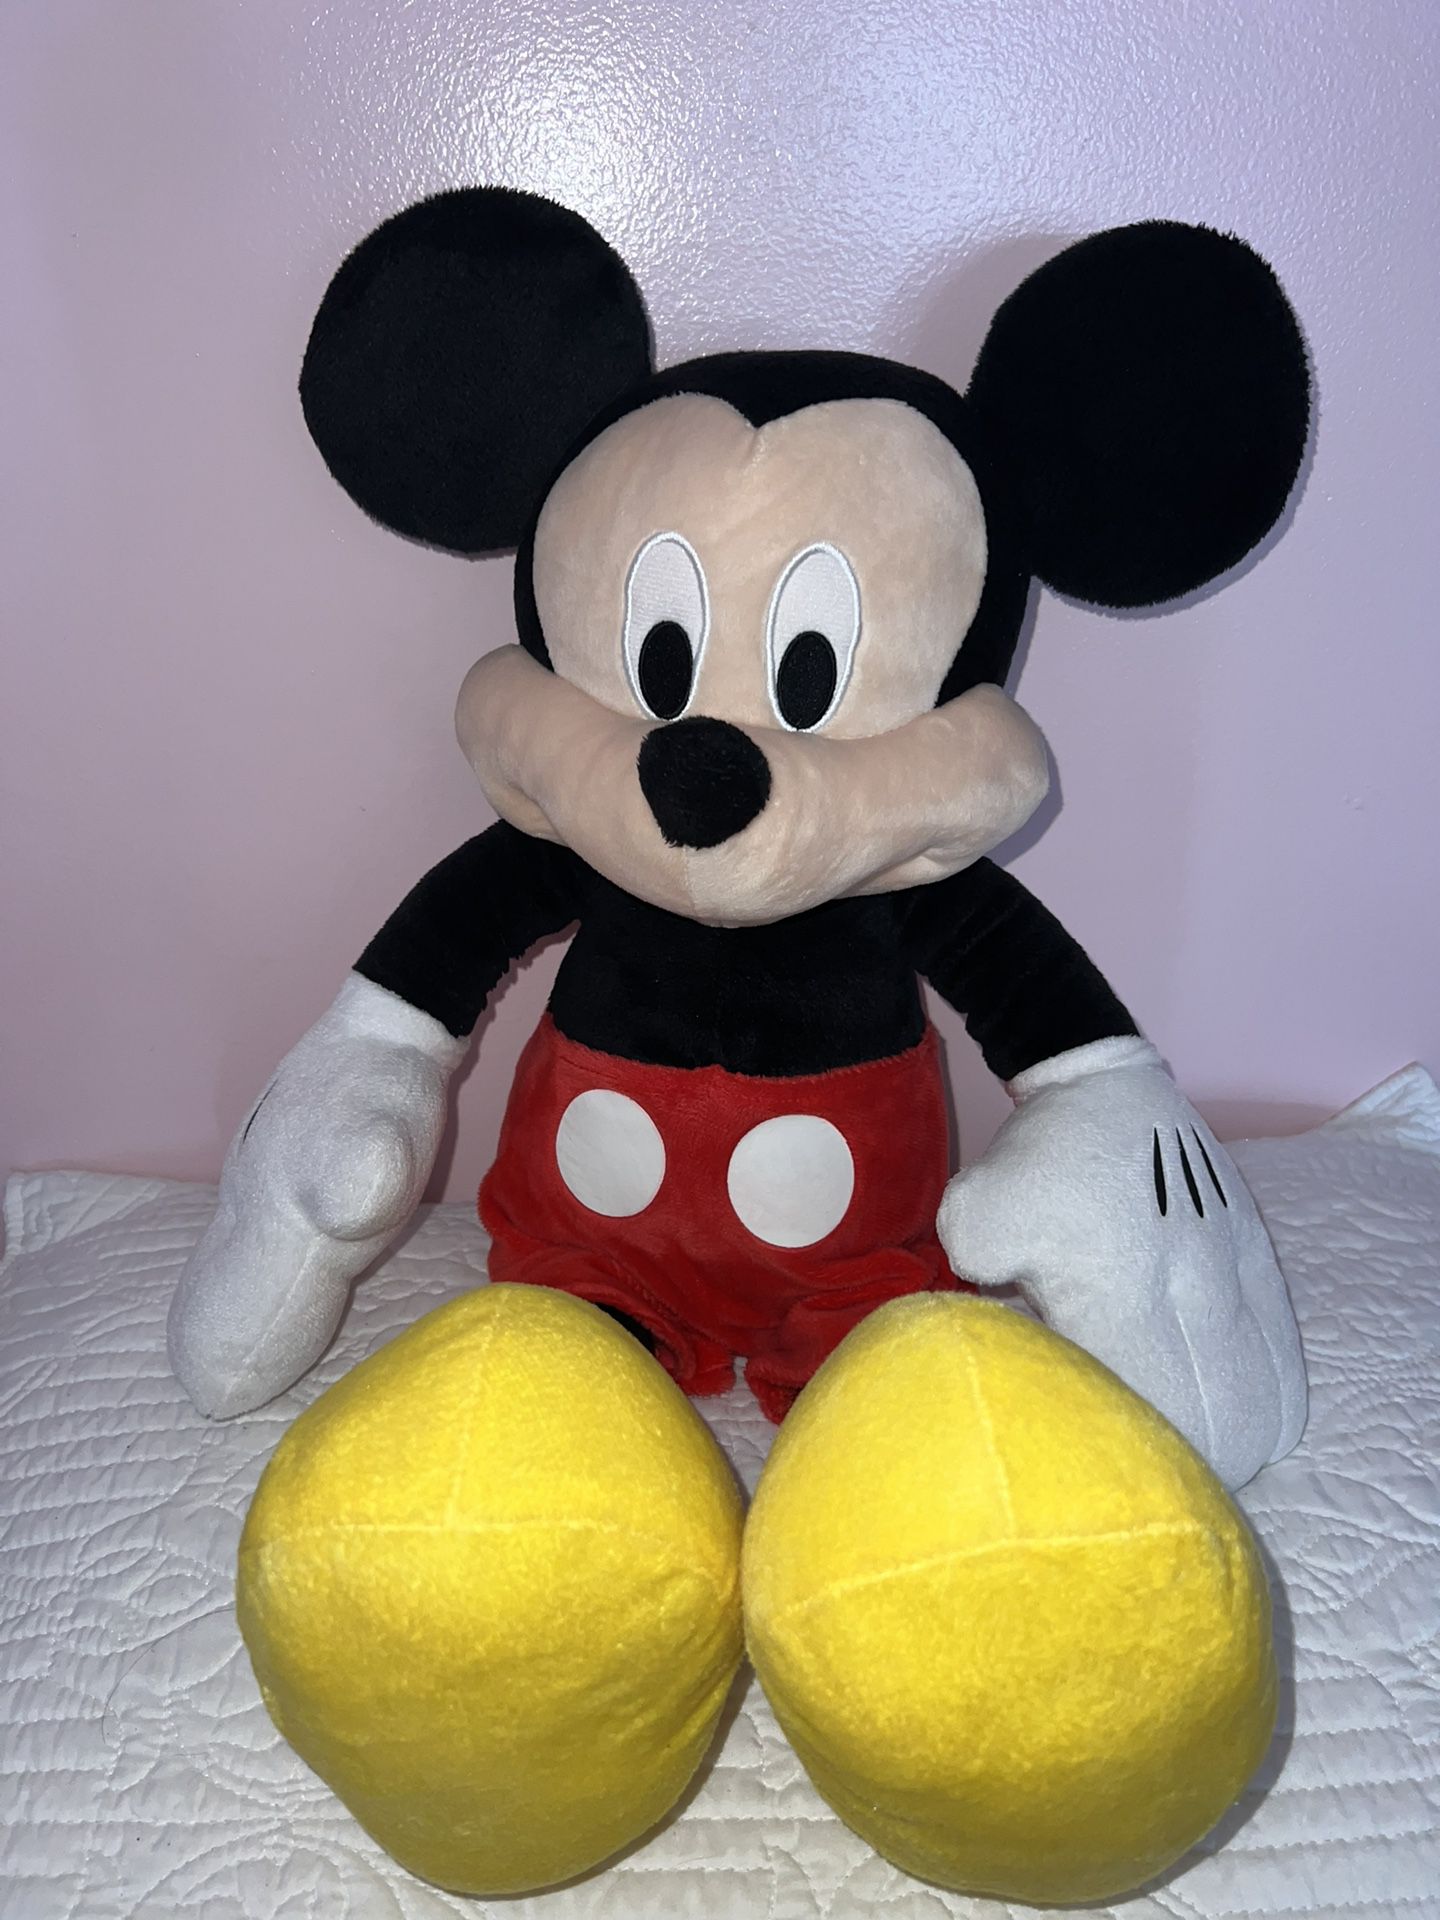 Disneyland Mickey Mouse Plushie